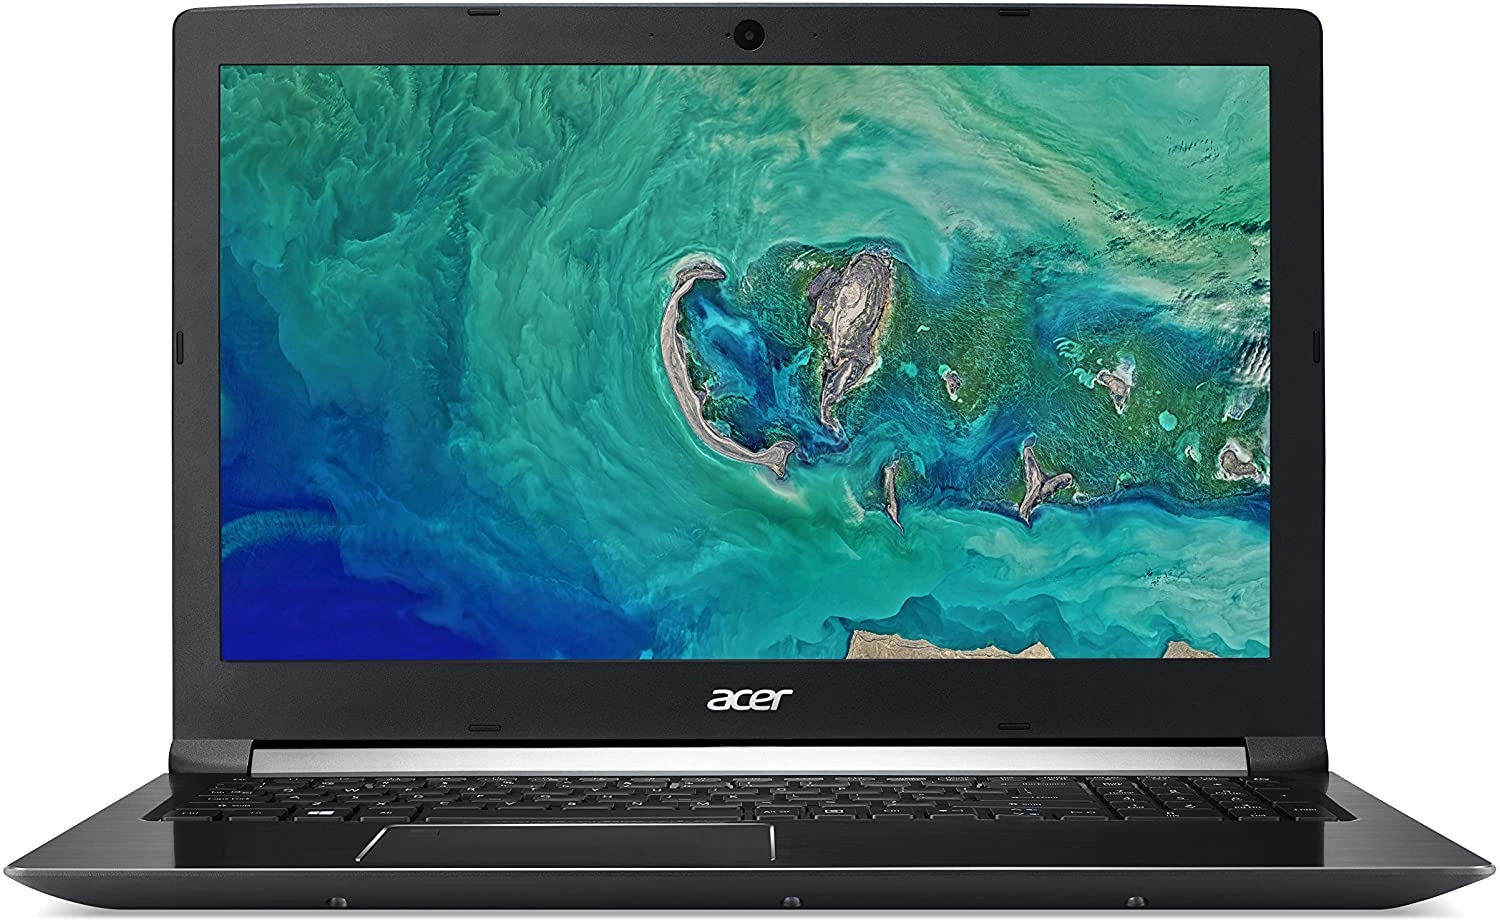 Acer Aspire 7 laptop image